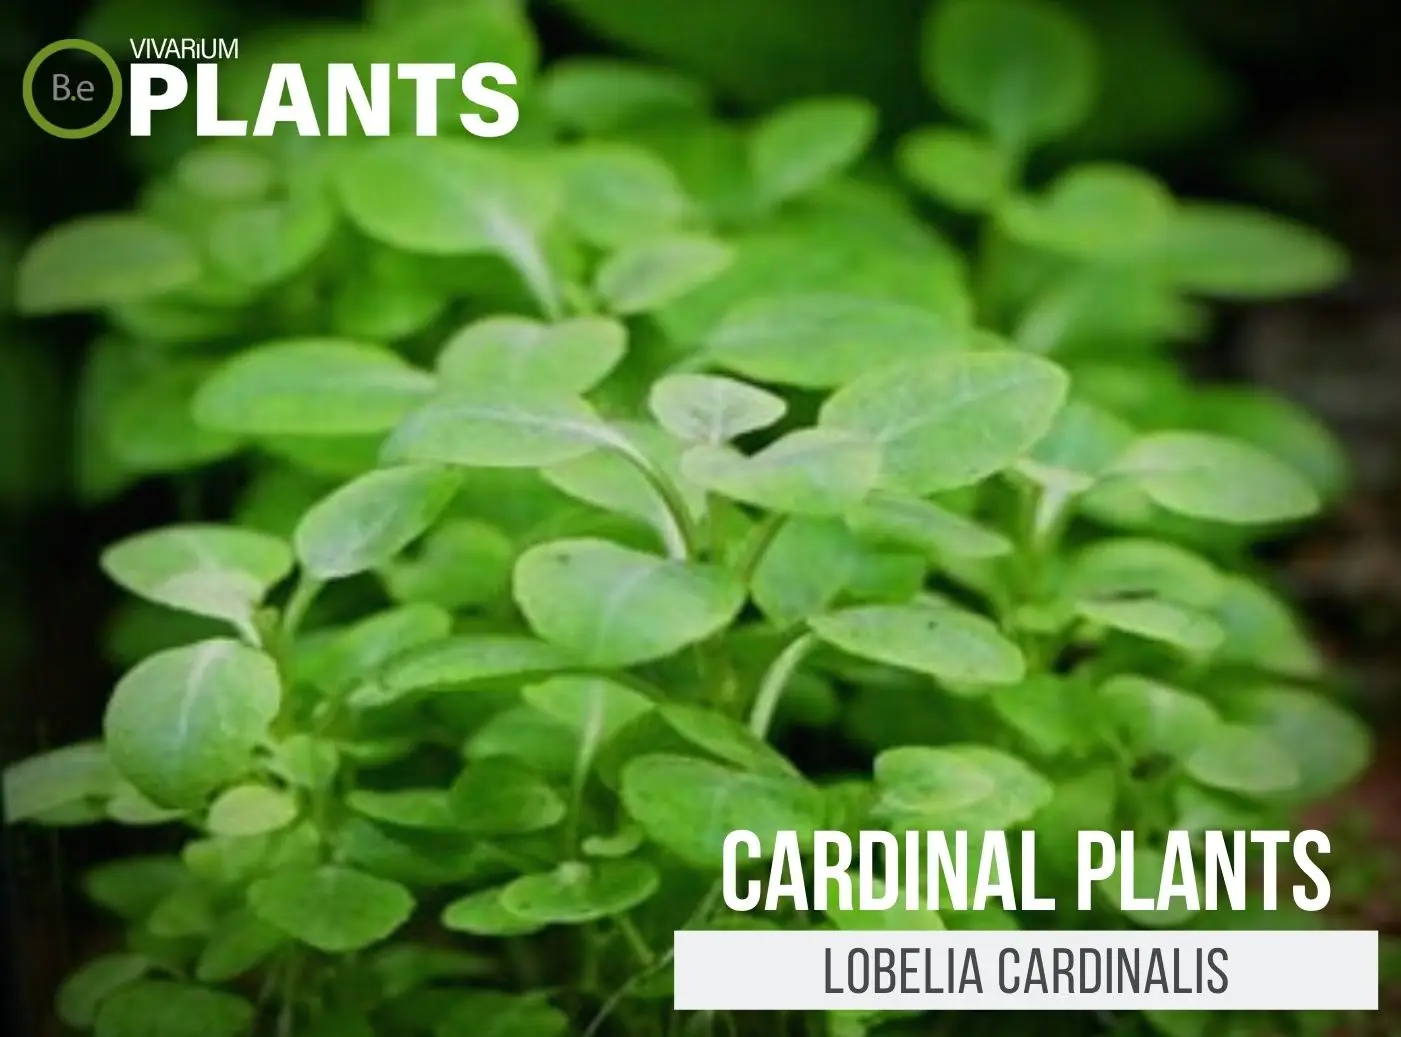 Lobelia cardinalis "Aquatic Cardinal Plant" Care Guide